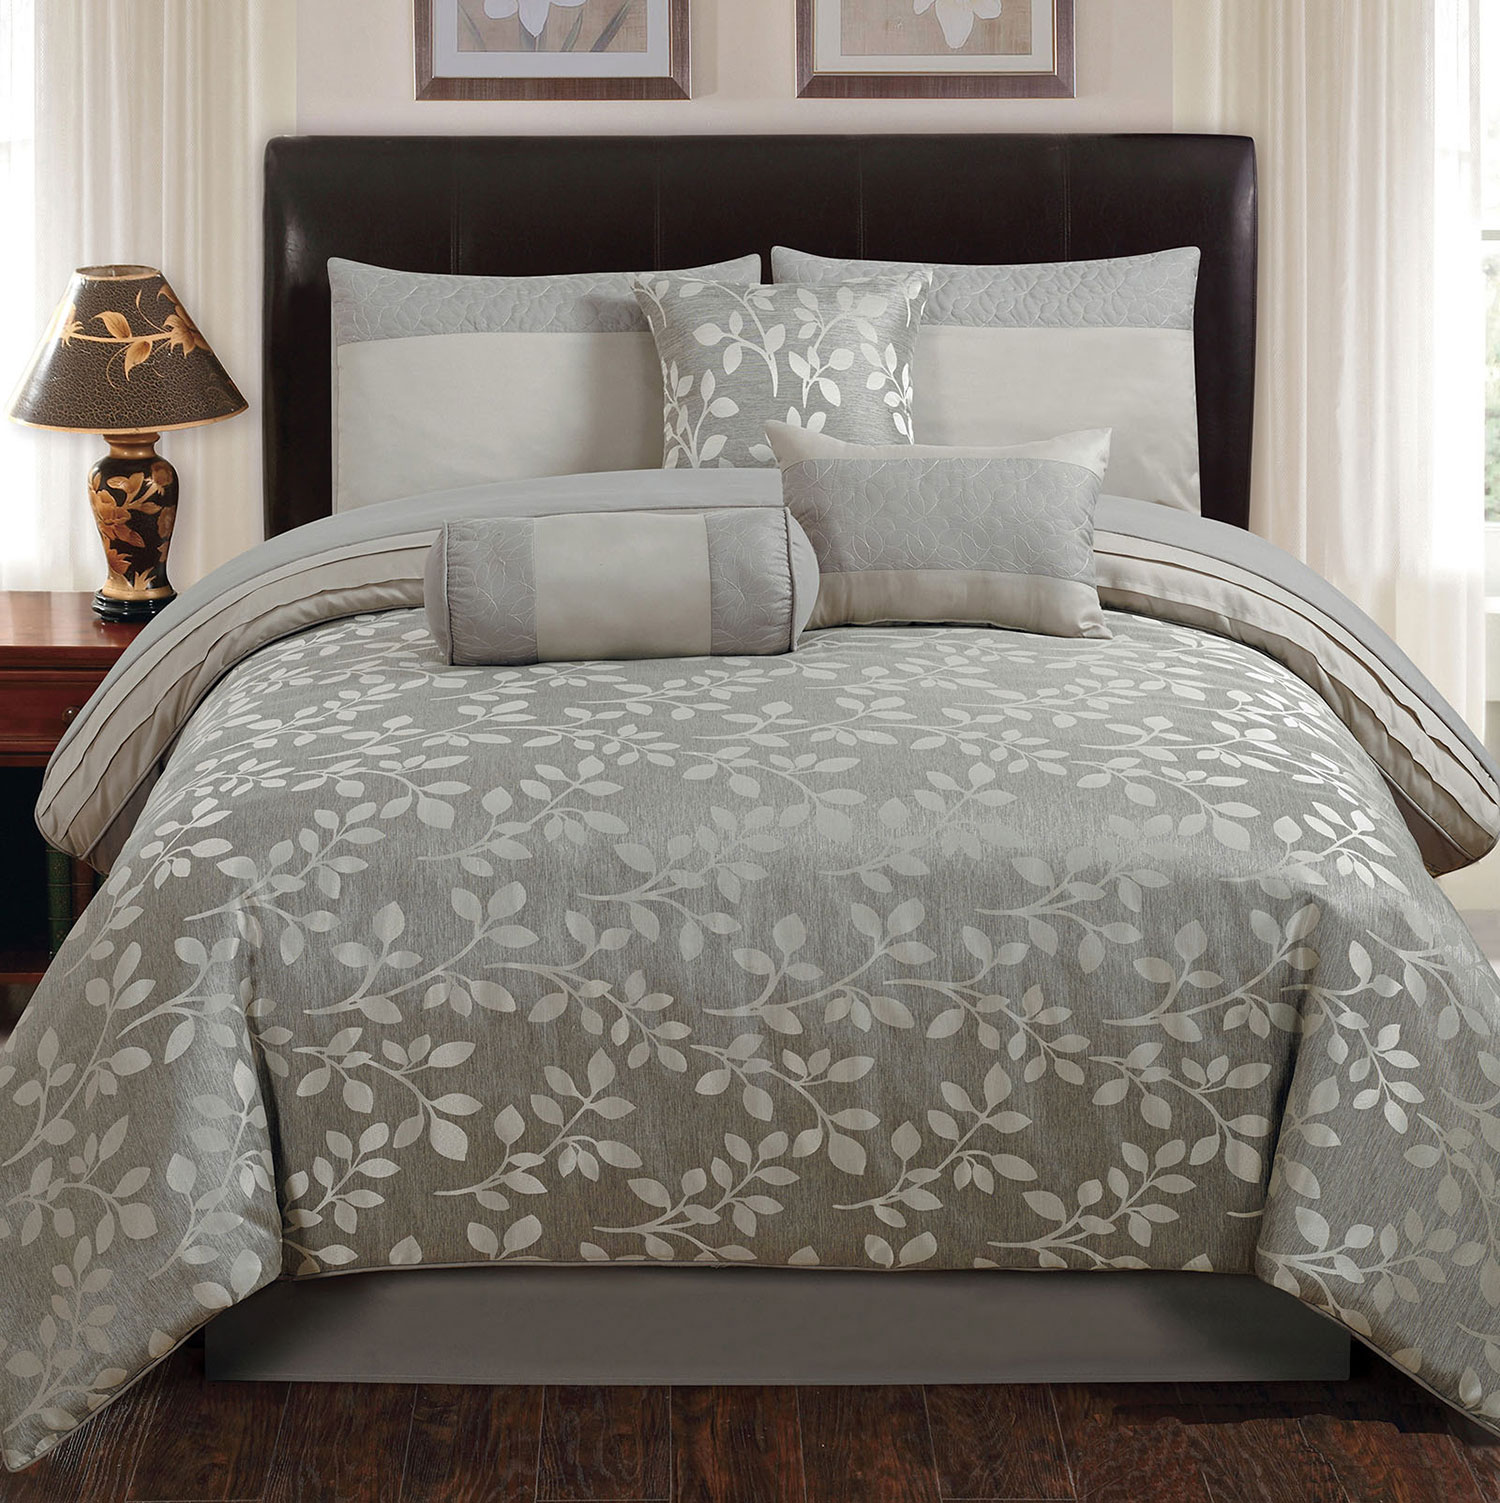 comforter queen hallmart grey platinum sets leaves selvy collectibles bedding bed piece bedroom silver pattern afw beddingsuperstore bedbathandbeyond beyond bath